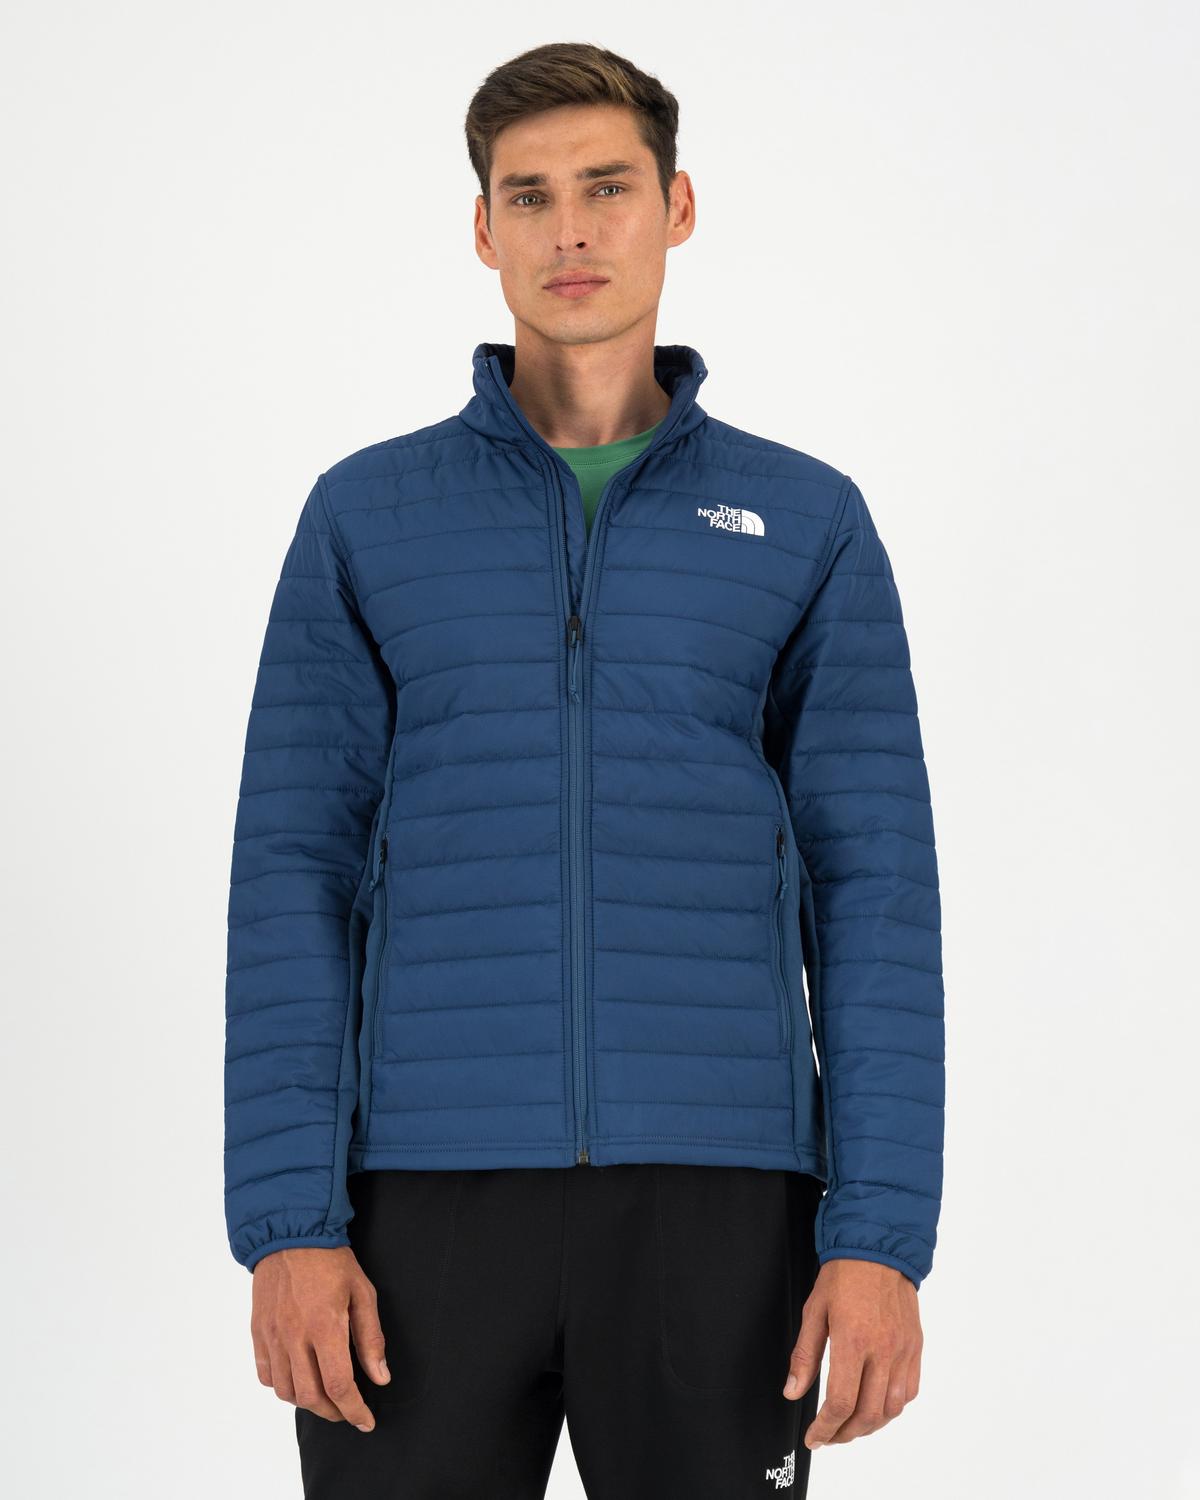 The North Face Men’s Canyonlands Hybrid Jacket | Cape Union Mart